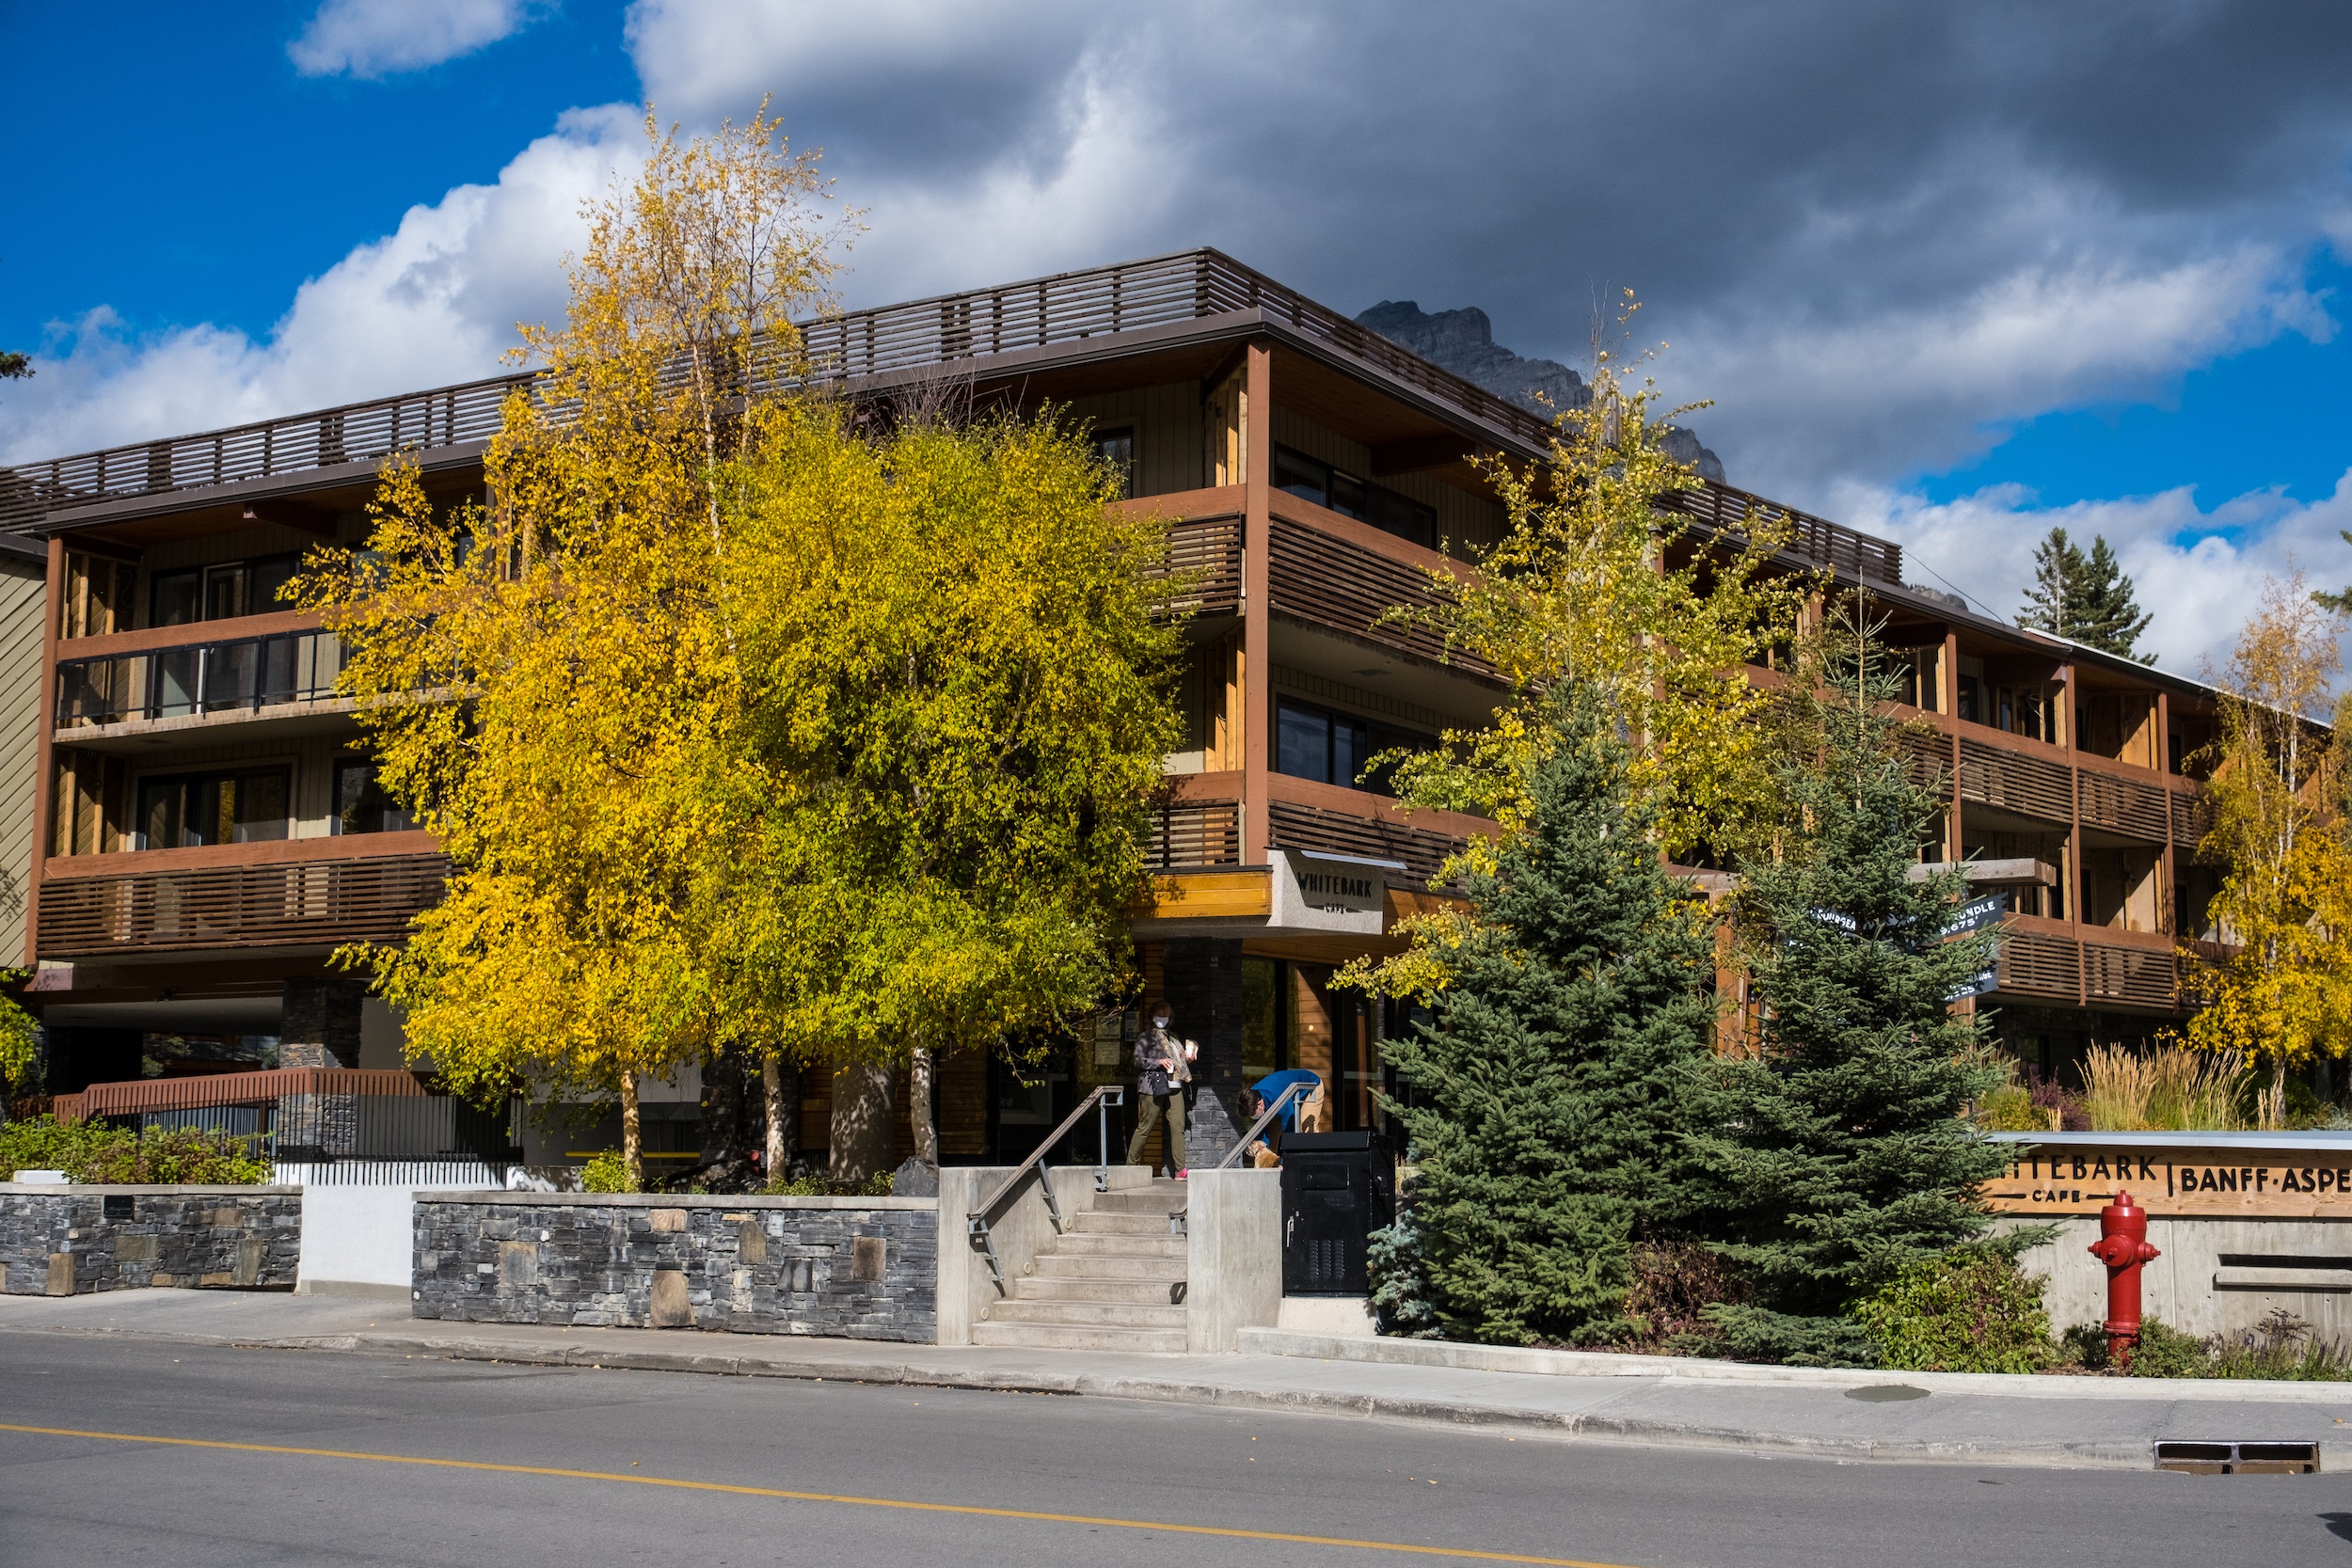 27 Banff Restaurants You'll Love